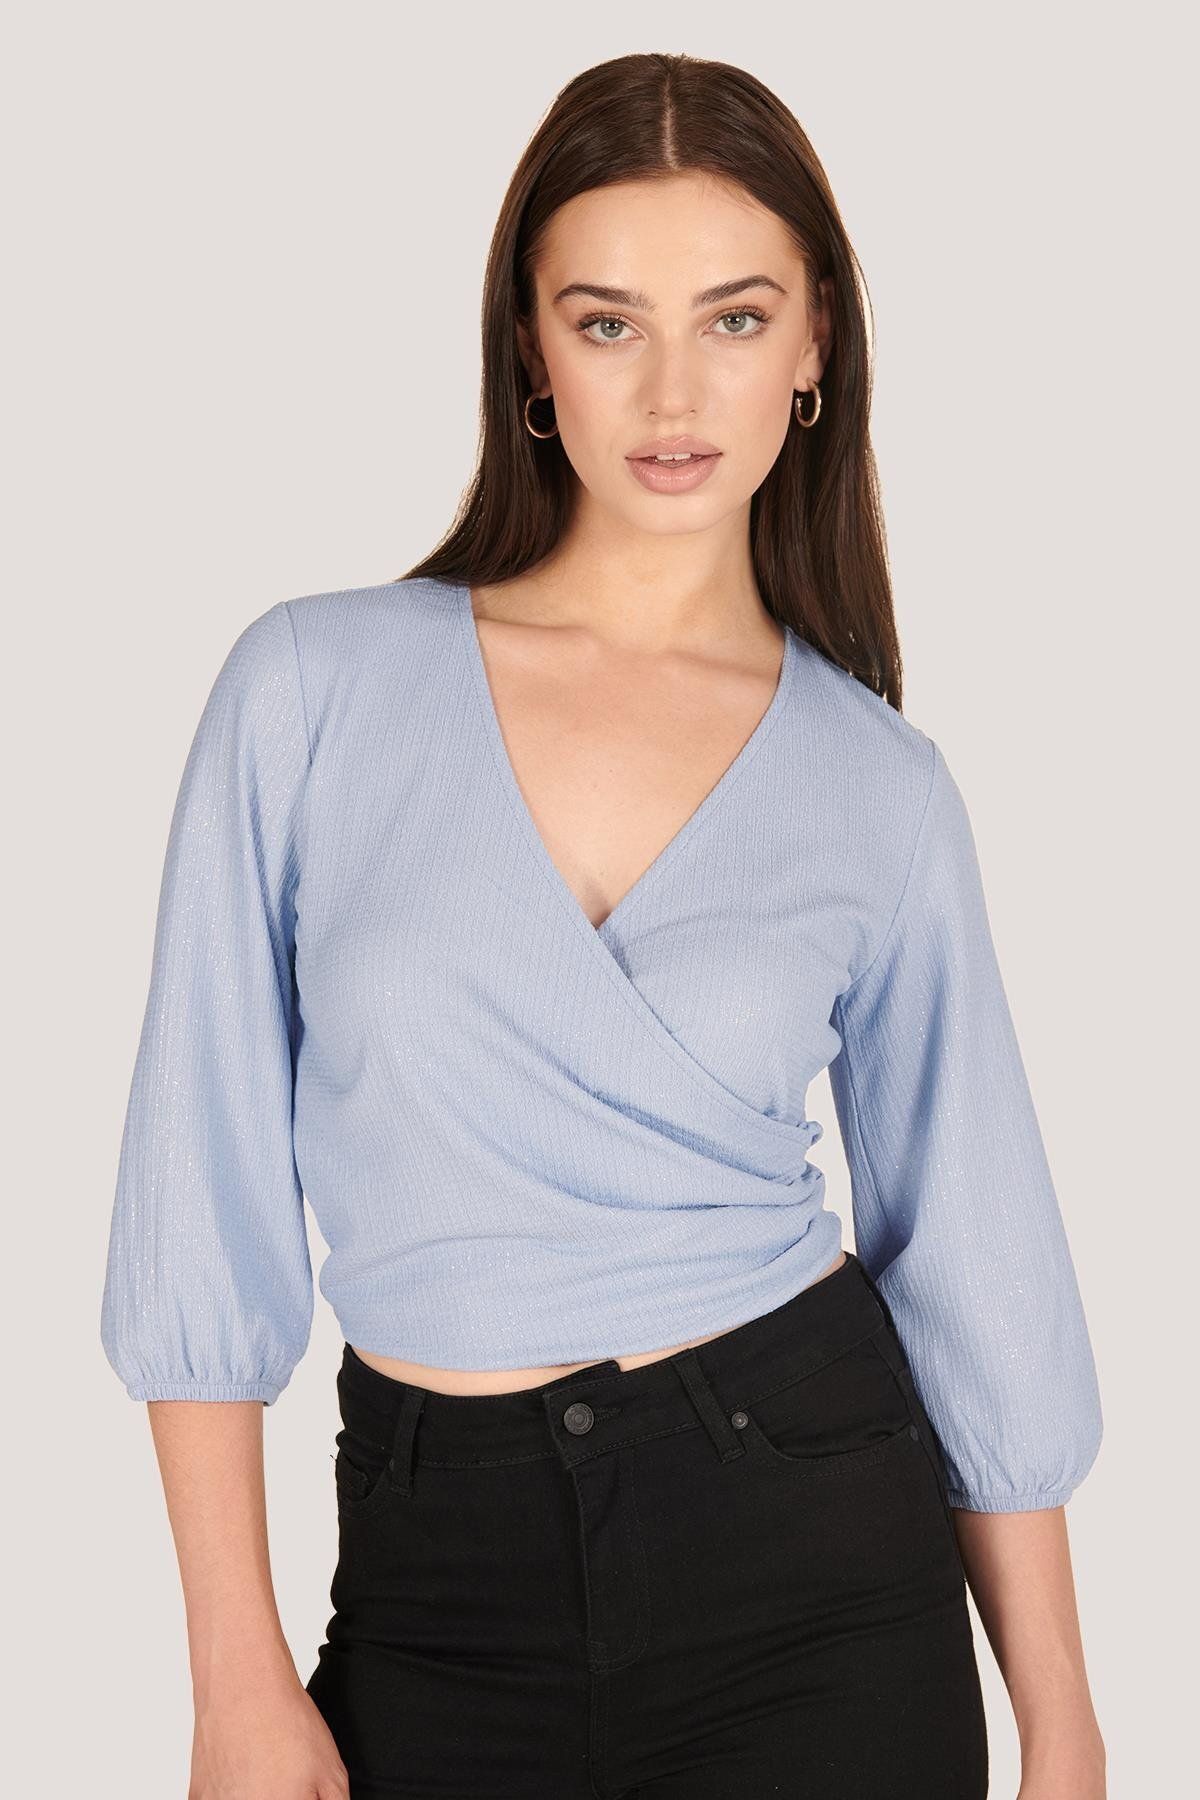 ES&SY P-005007 - Kadın Uzun Kollu V Yaka Wrap Bluz - Mavi